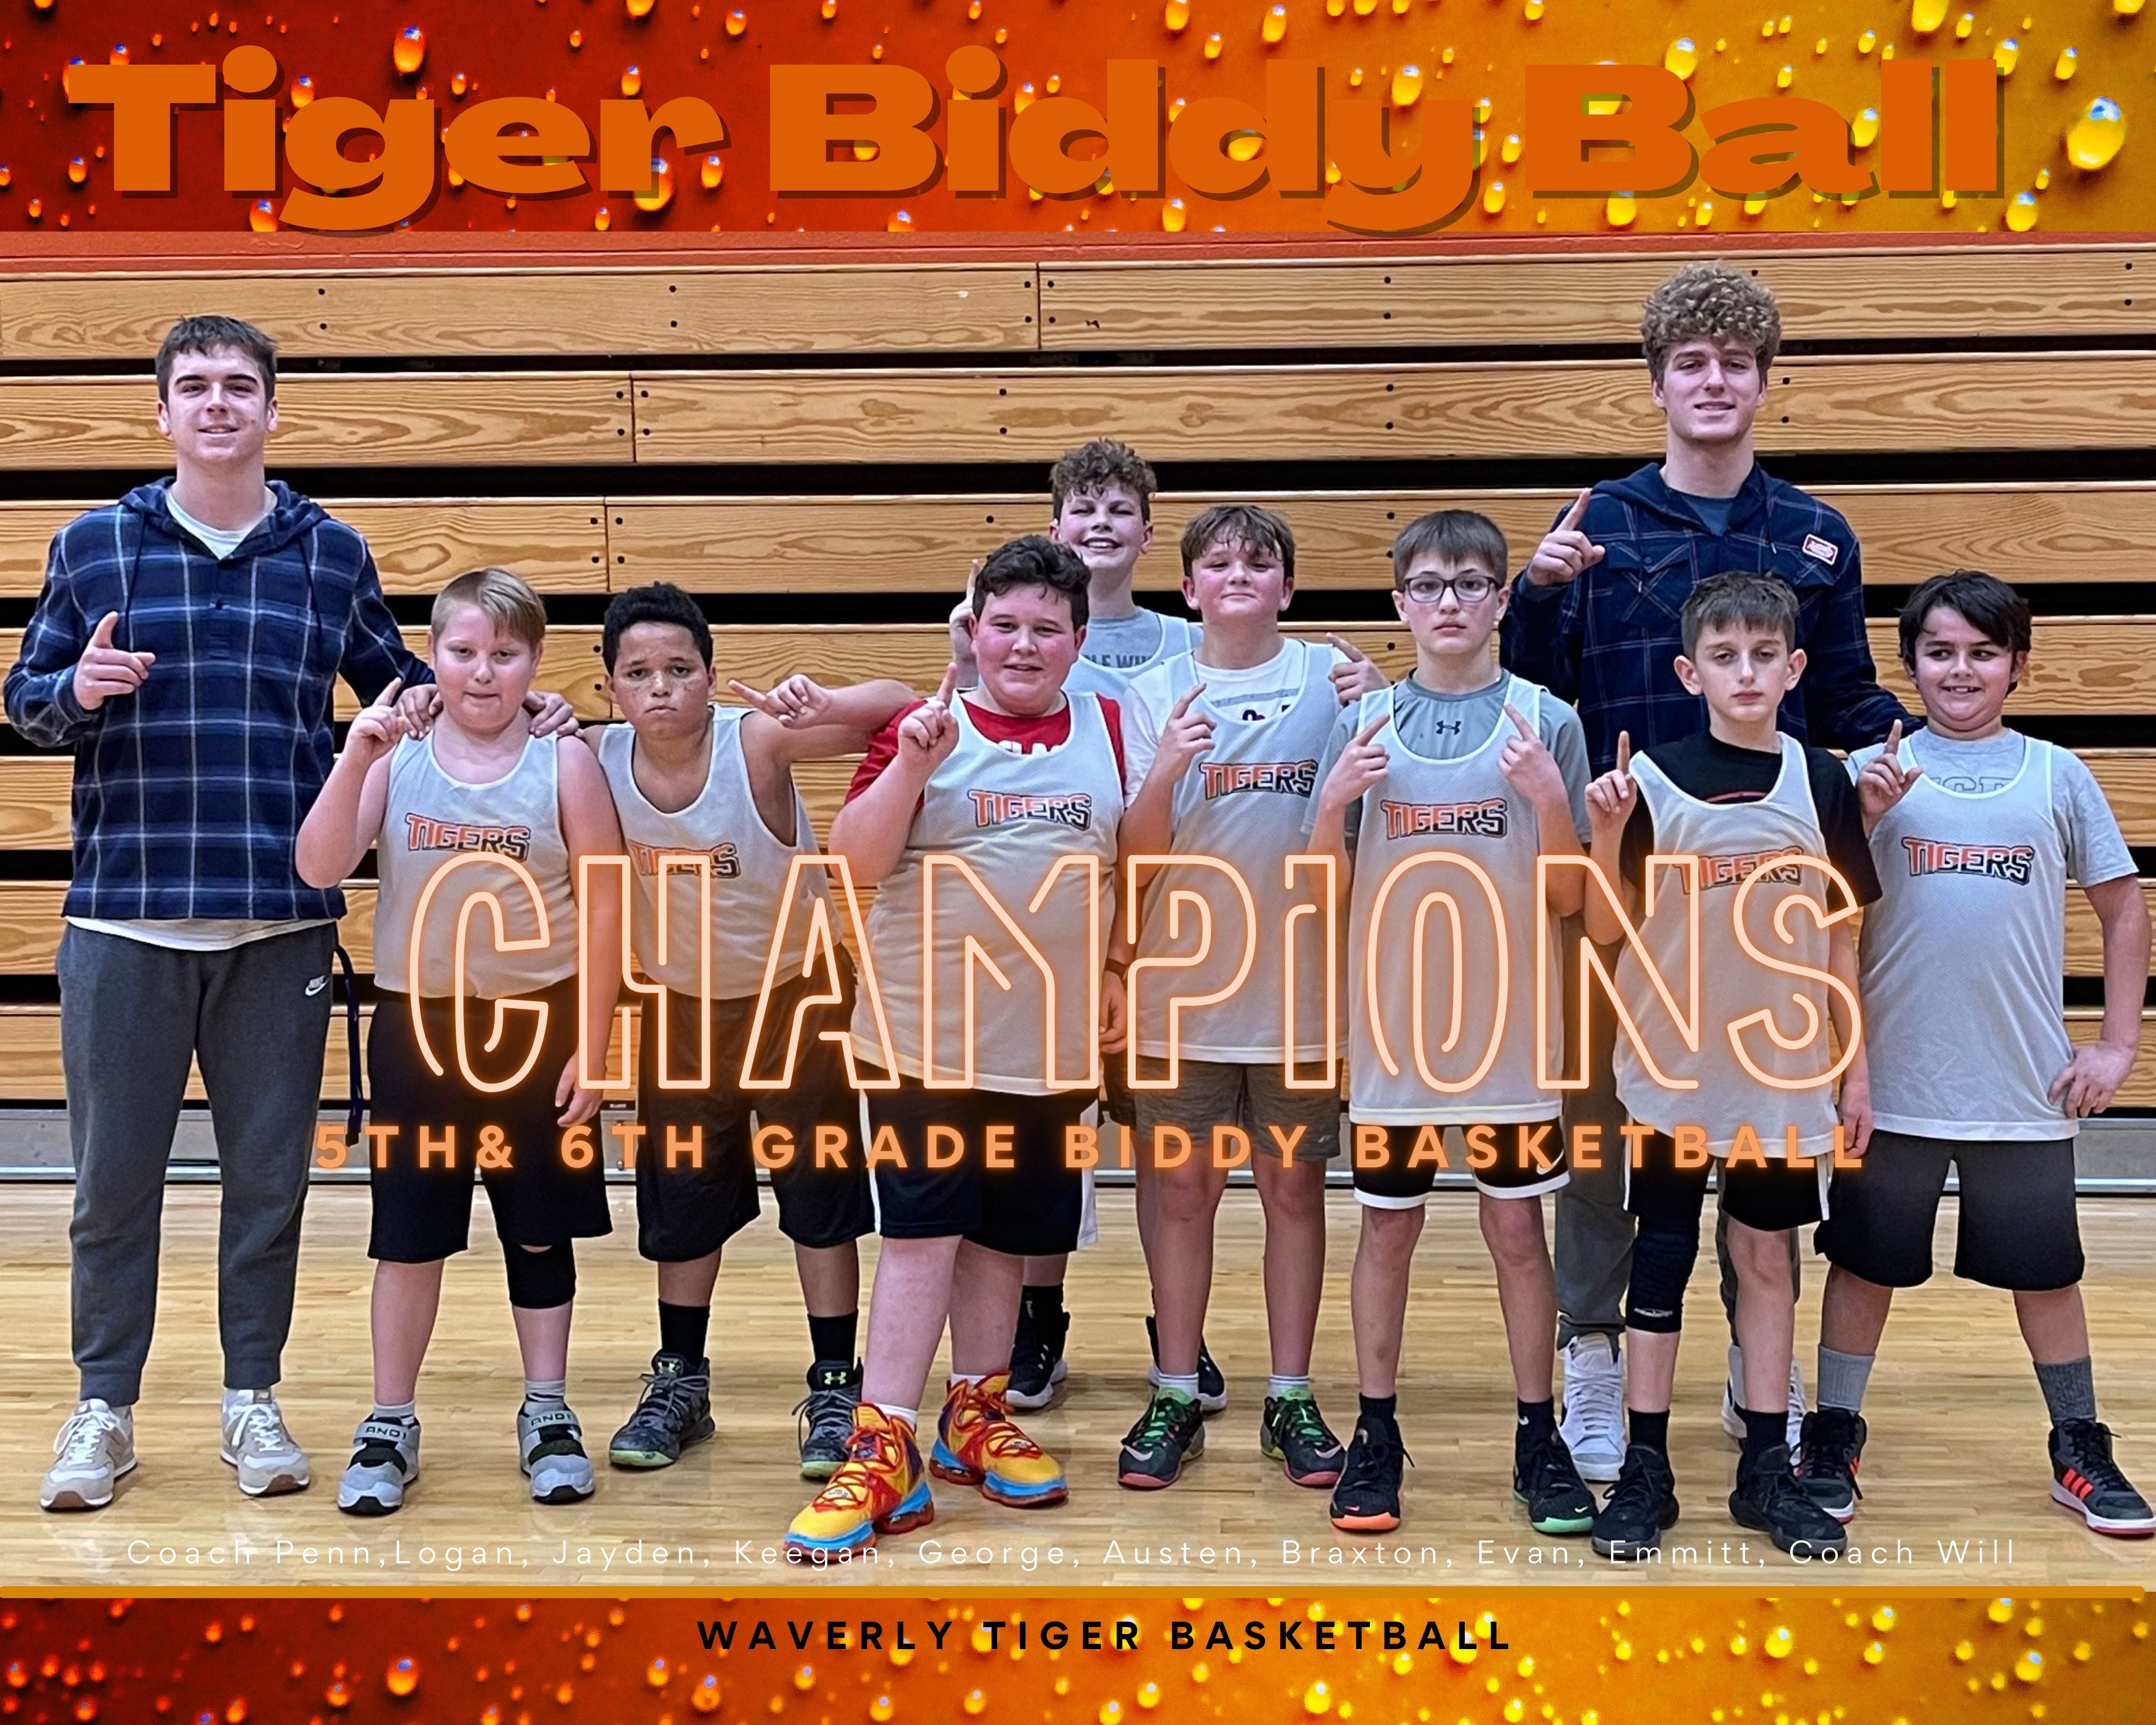 2021-2022 Tiger Biddy Ball Champions (5th & 6th Grade)